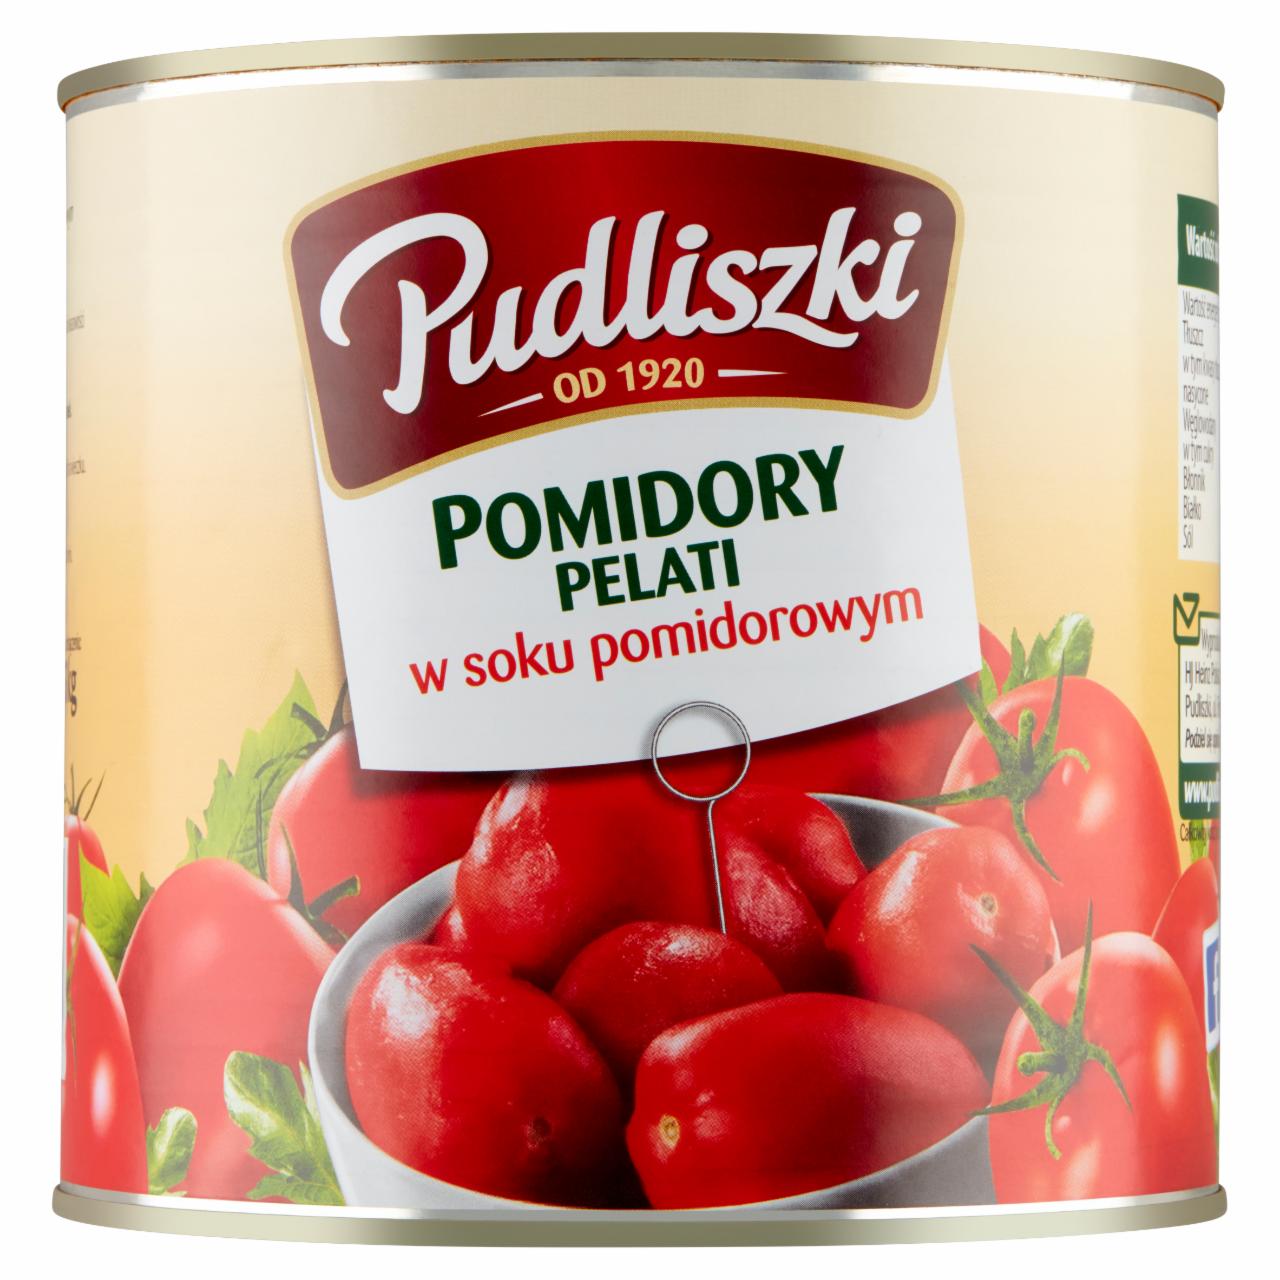 Photo - Pudliszki Pelati Tomatoes in Tomato Juice